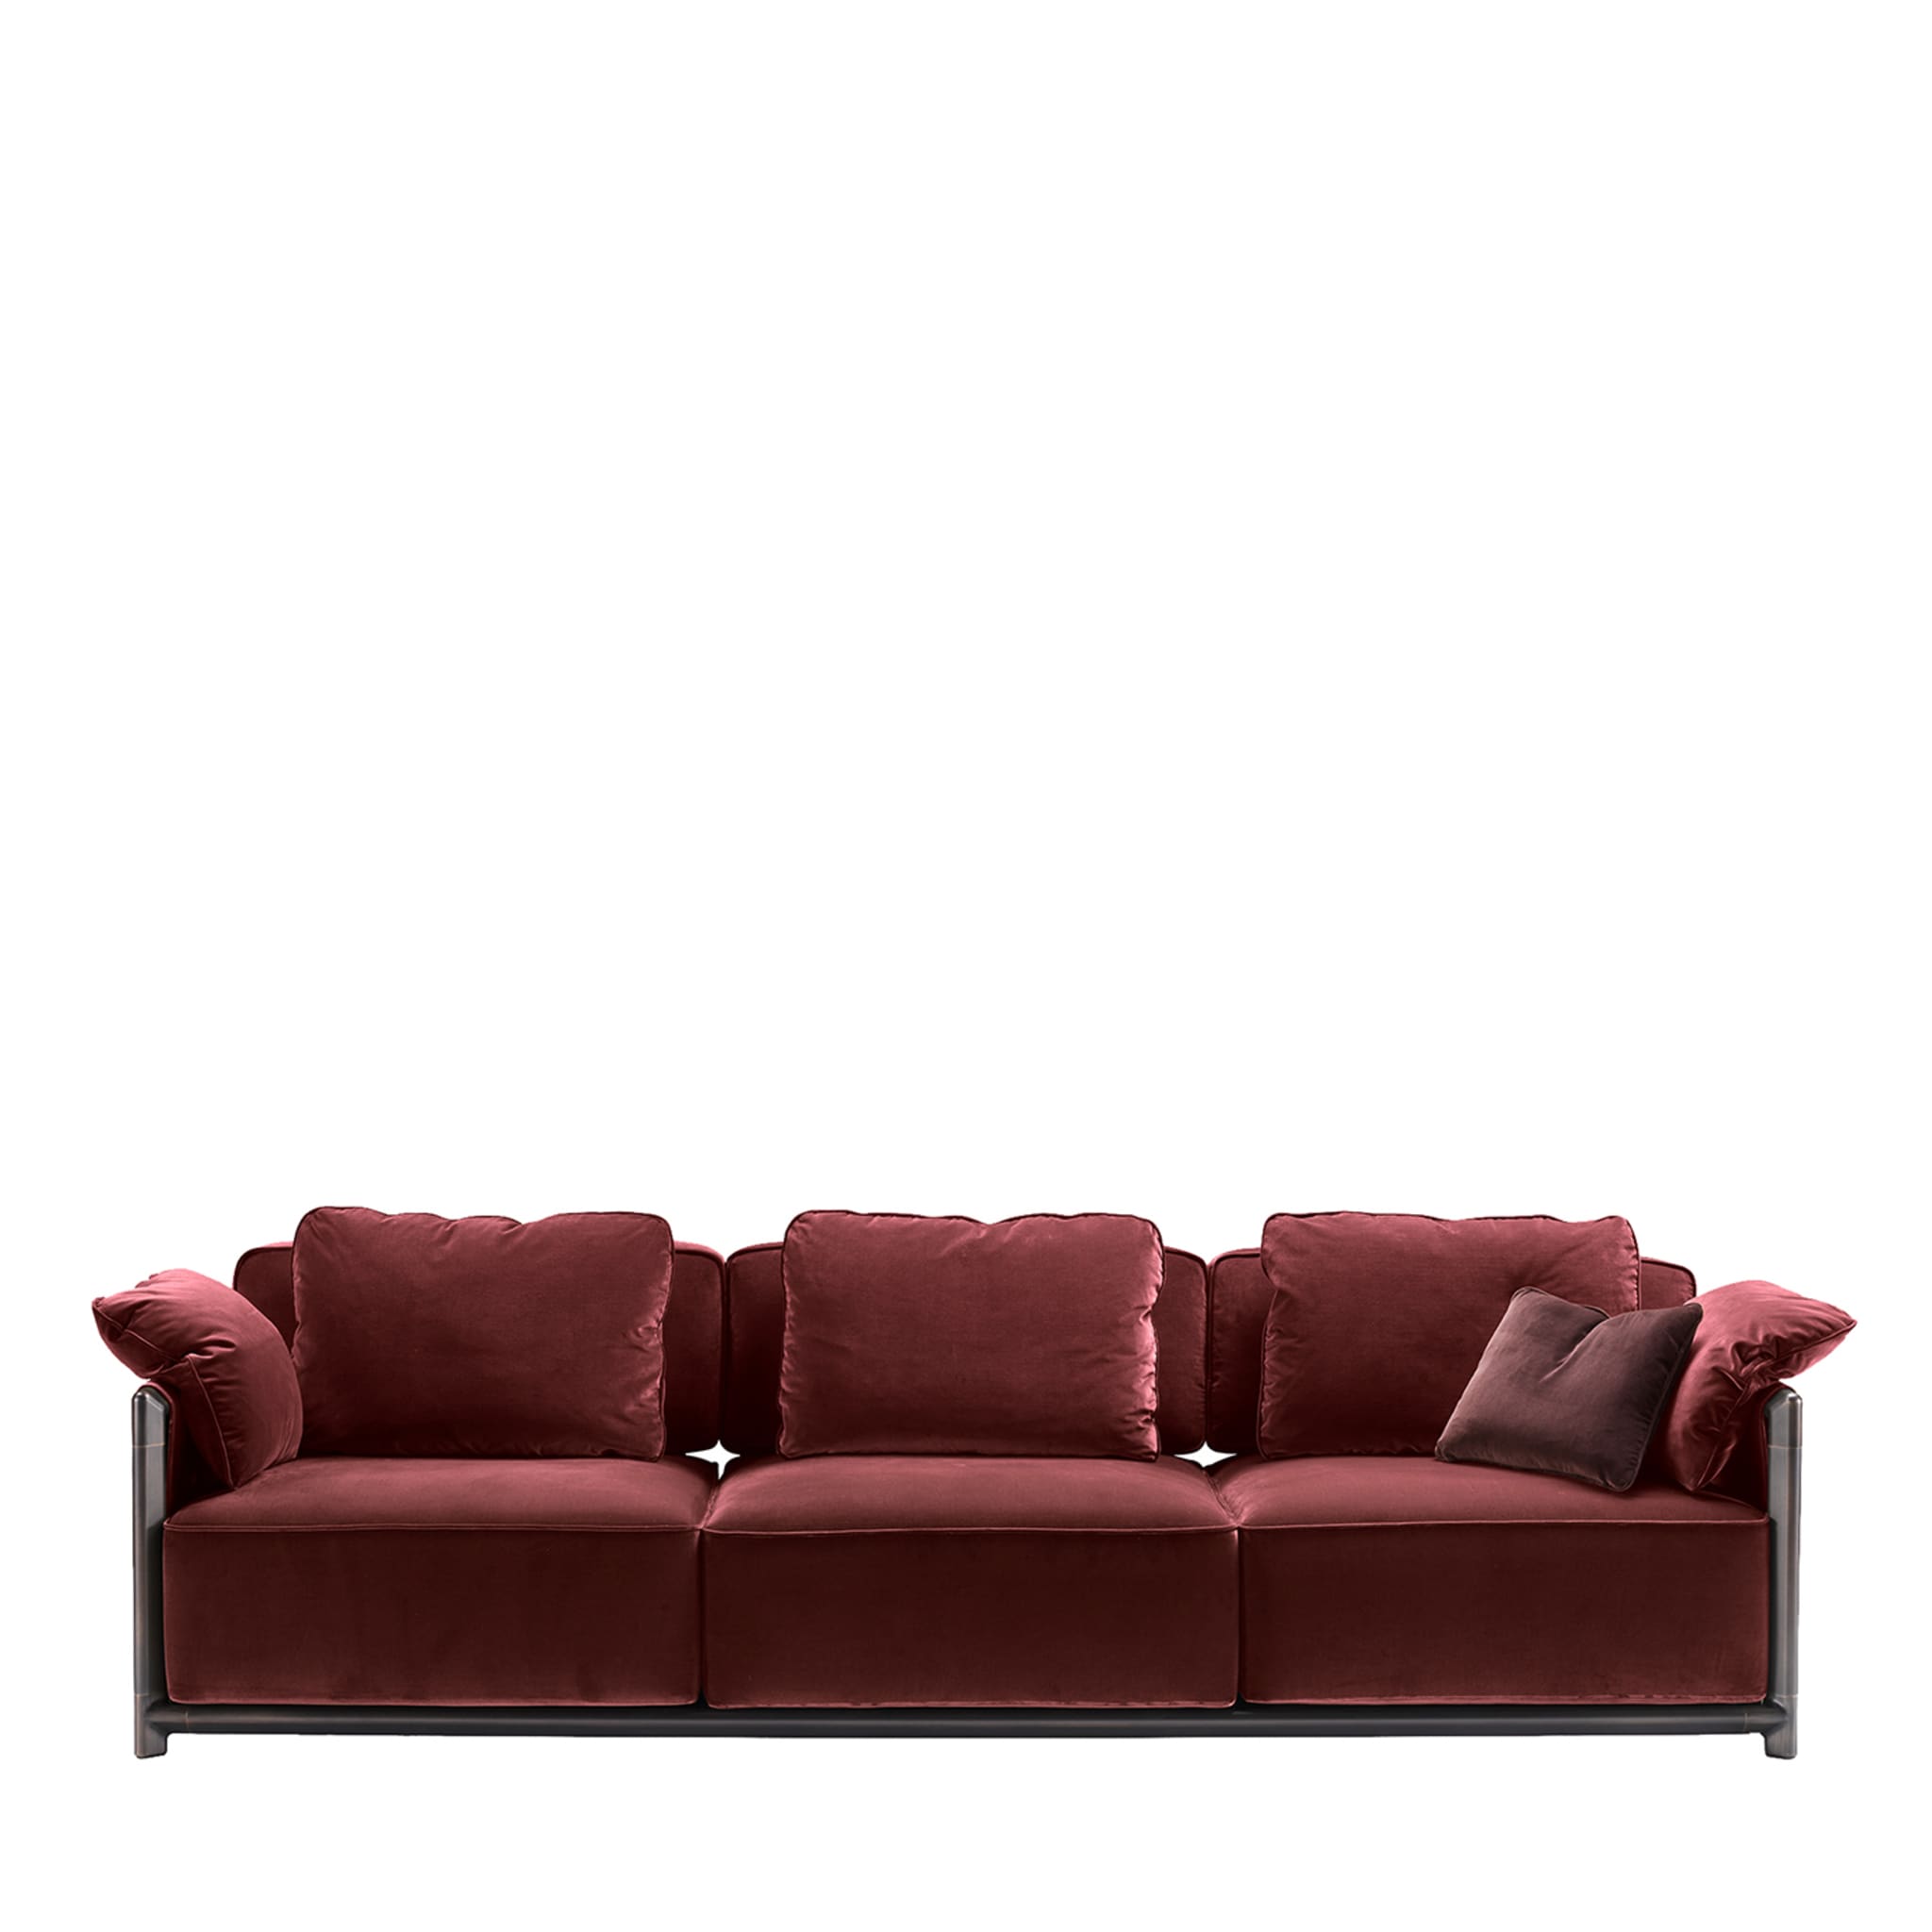 Dodo burgunderfarbenes sofa by Stefano Giovannoni - Hauptansicht